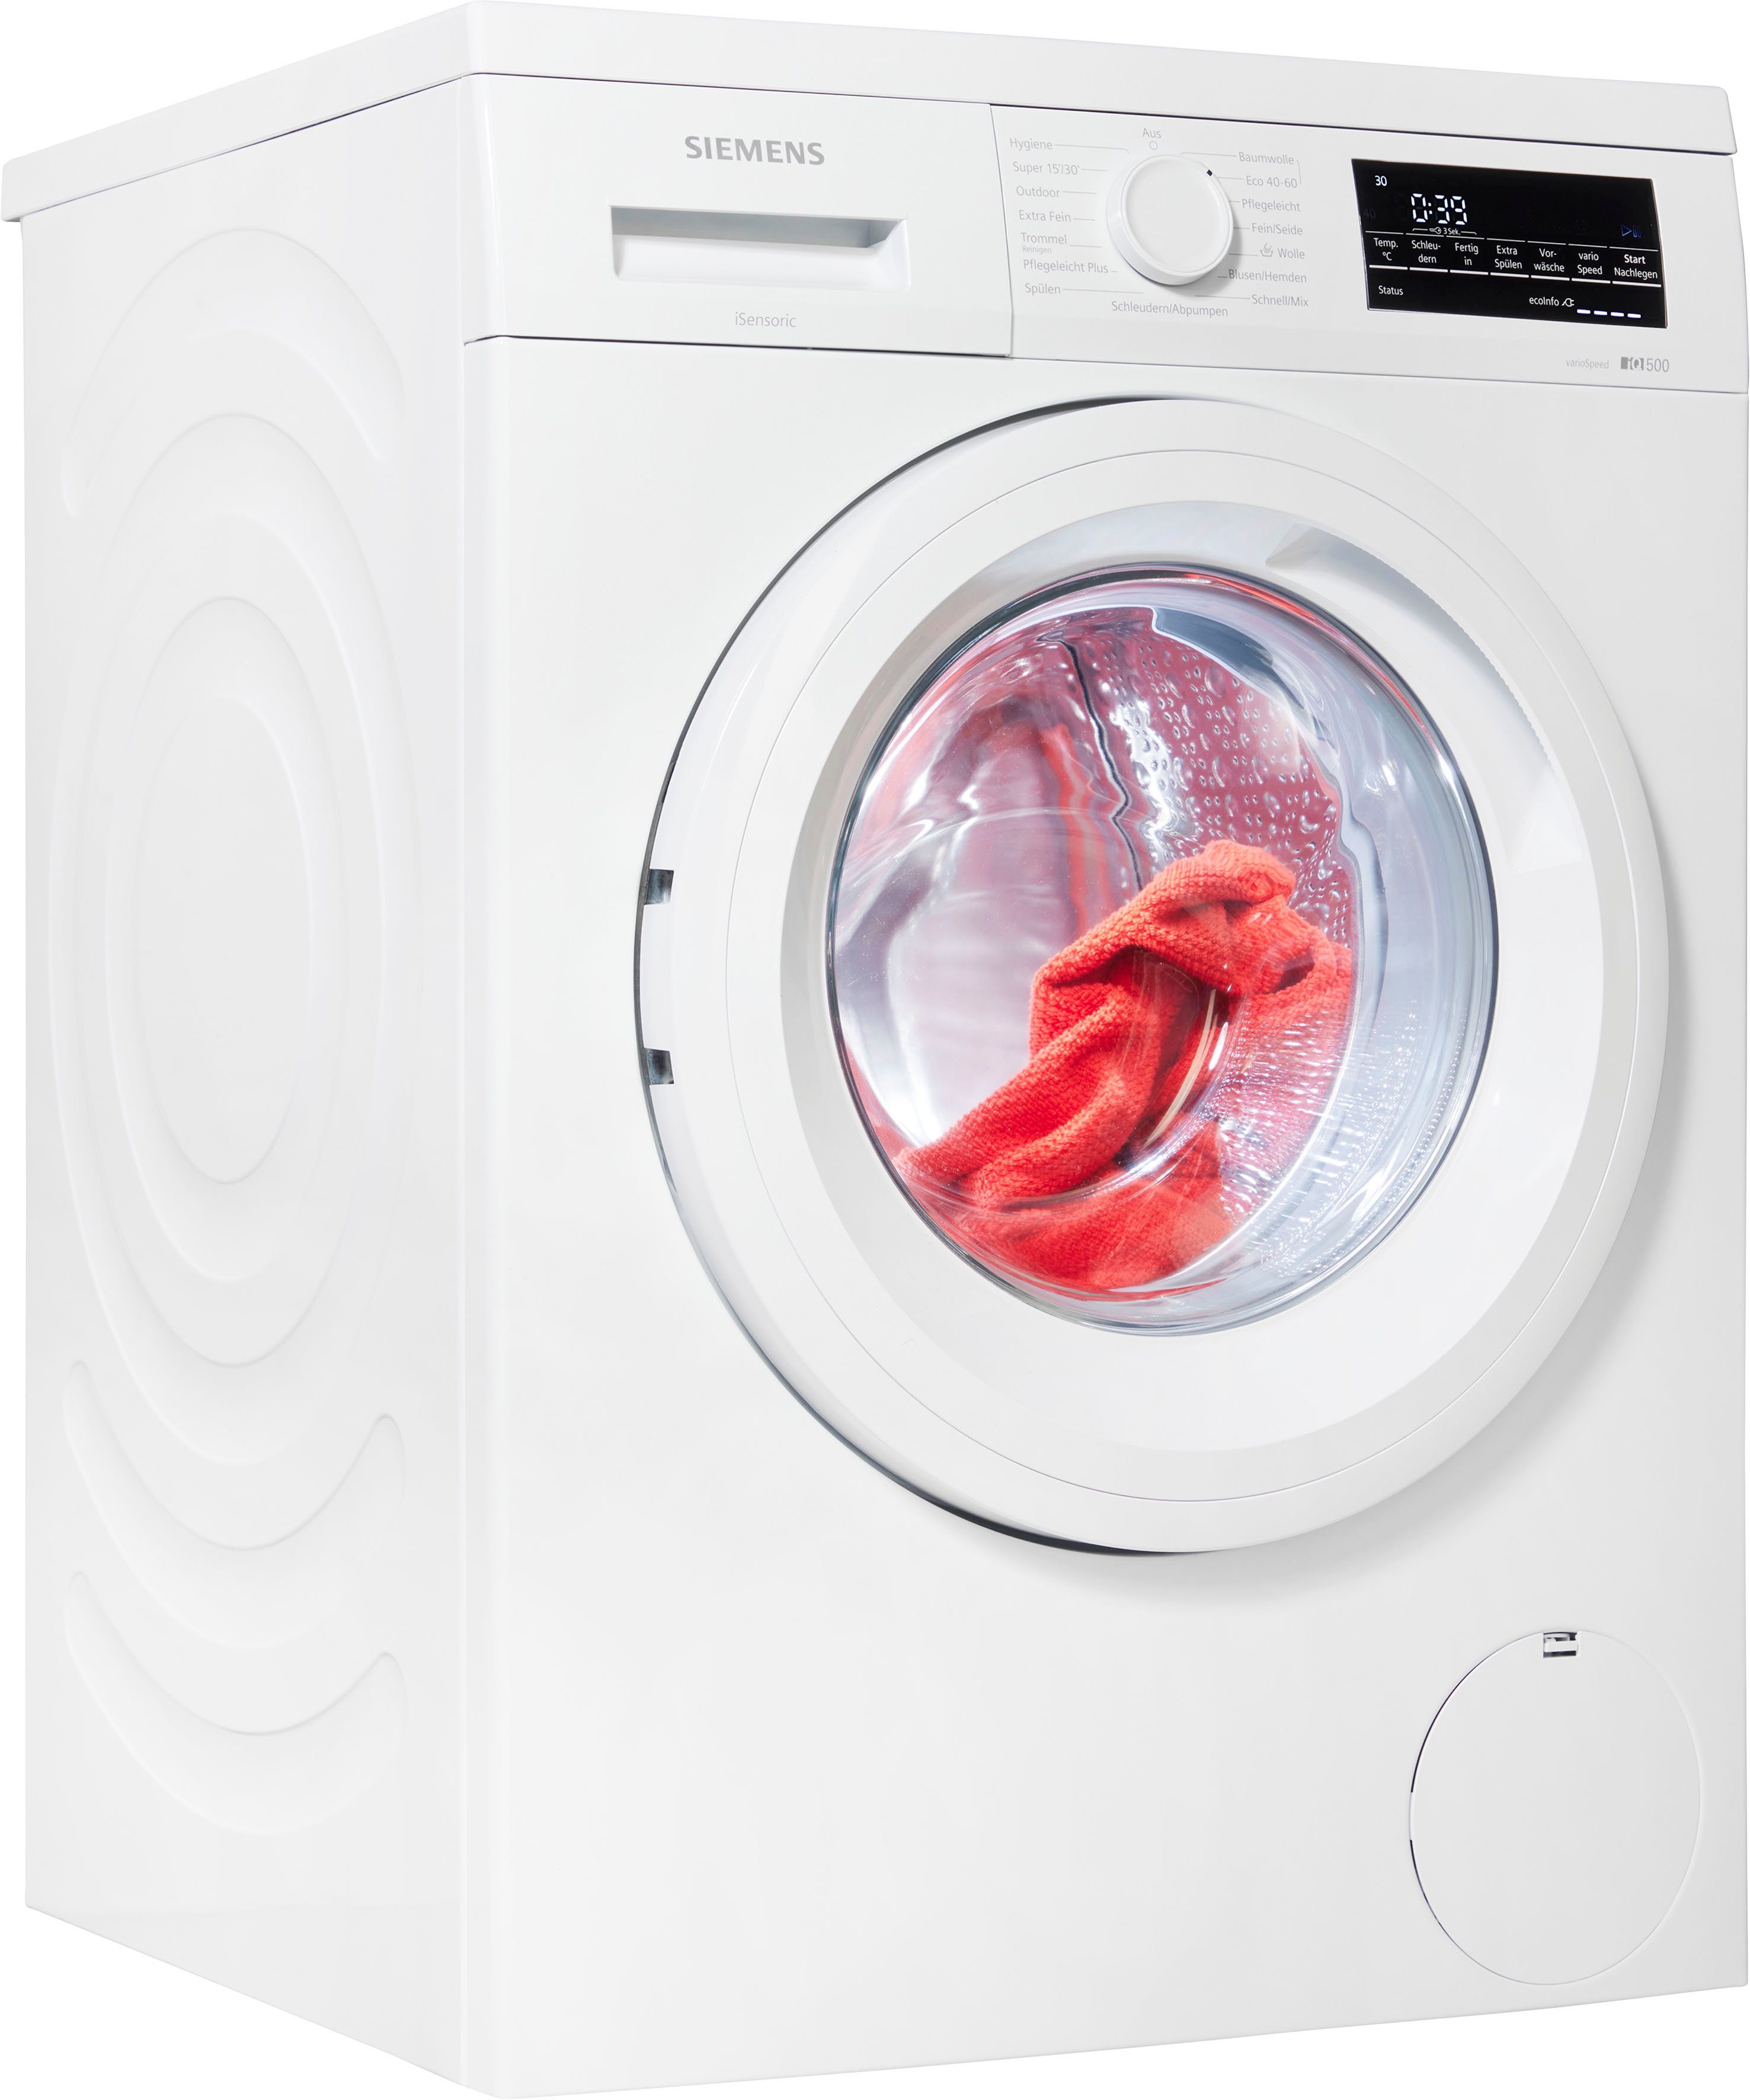 kg, unsere WU14UT21, U/min, SIEMENS 1400 Waschmaschine energieeffizienteste Energie-Effizienzklasse Beste A - 9